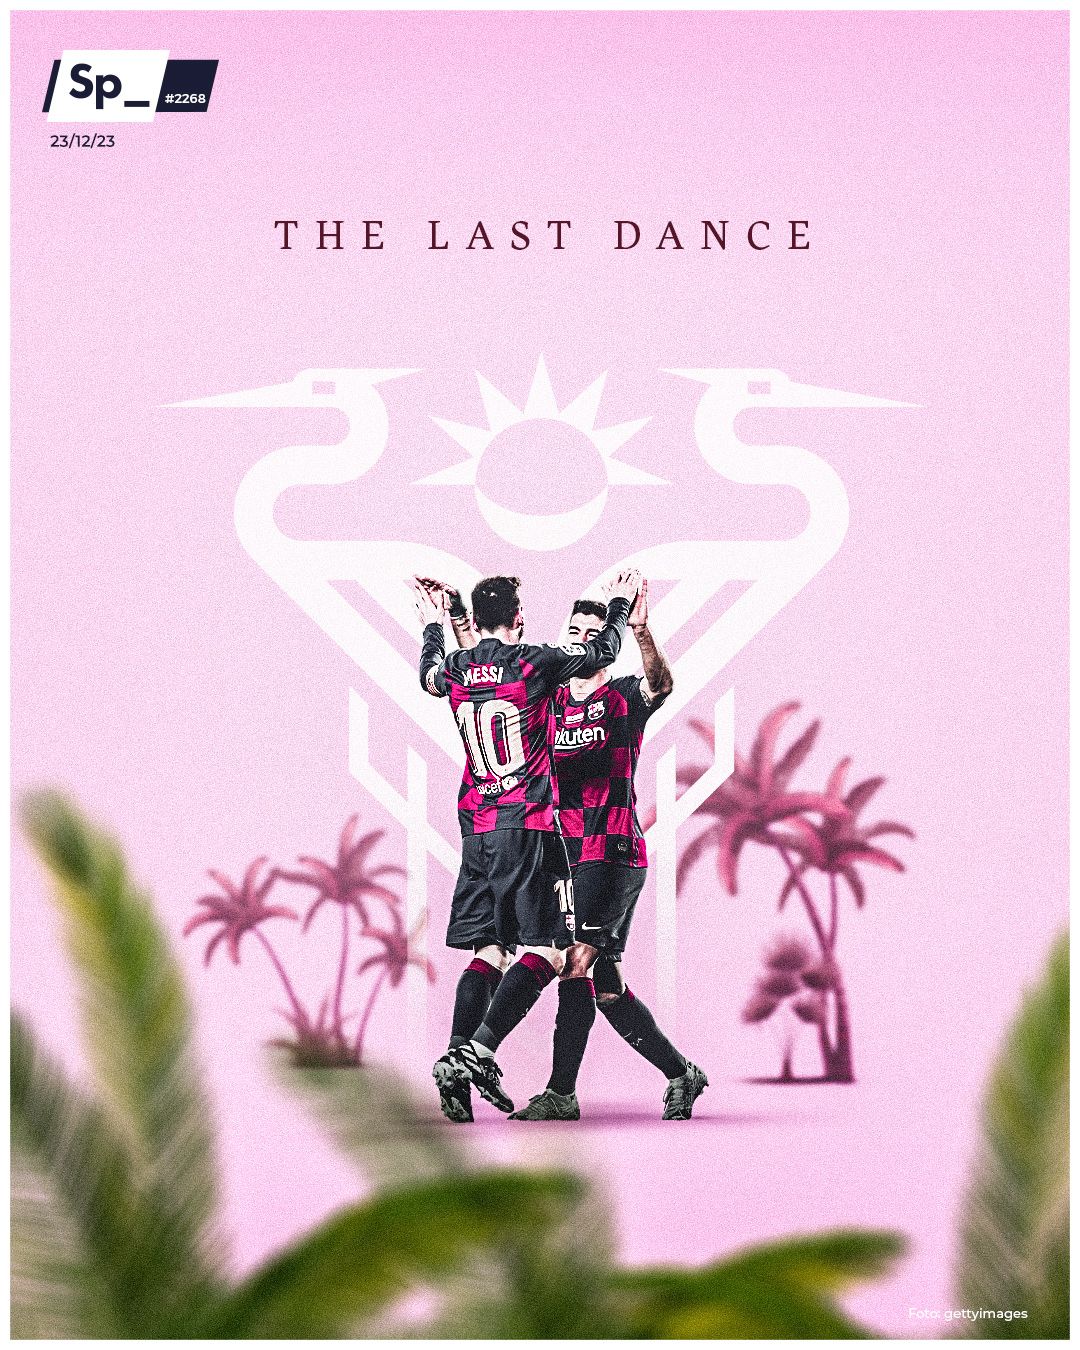 THE LAST DANCE